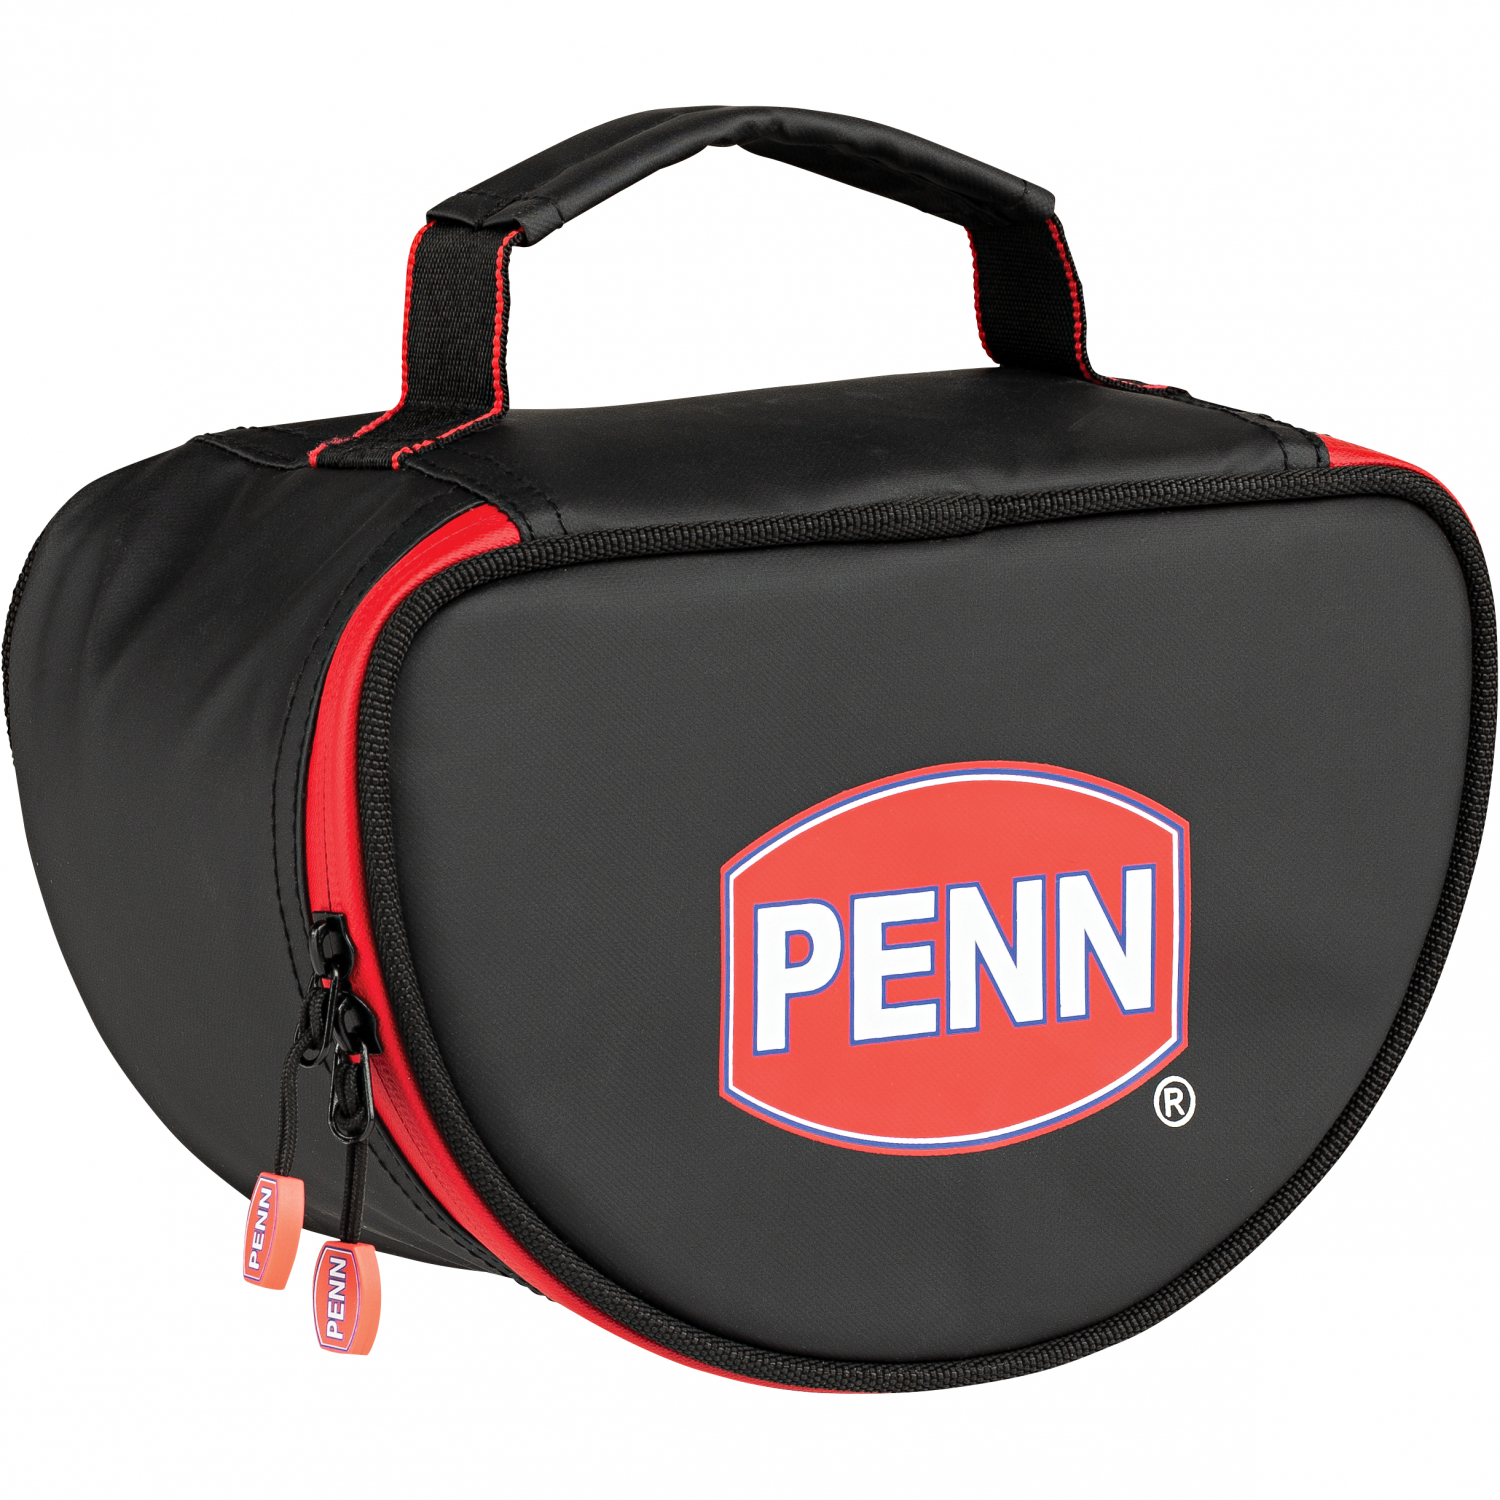 https://images.askari-sport.com/en/product/1/large/penn-bag-reel-case.jpg